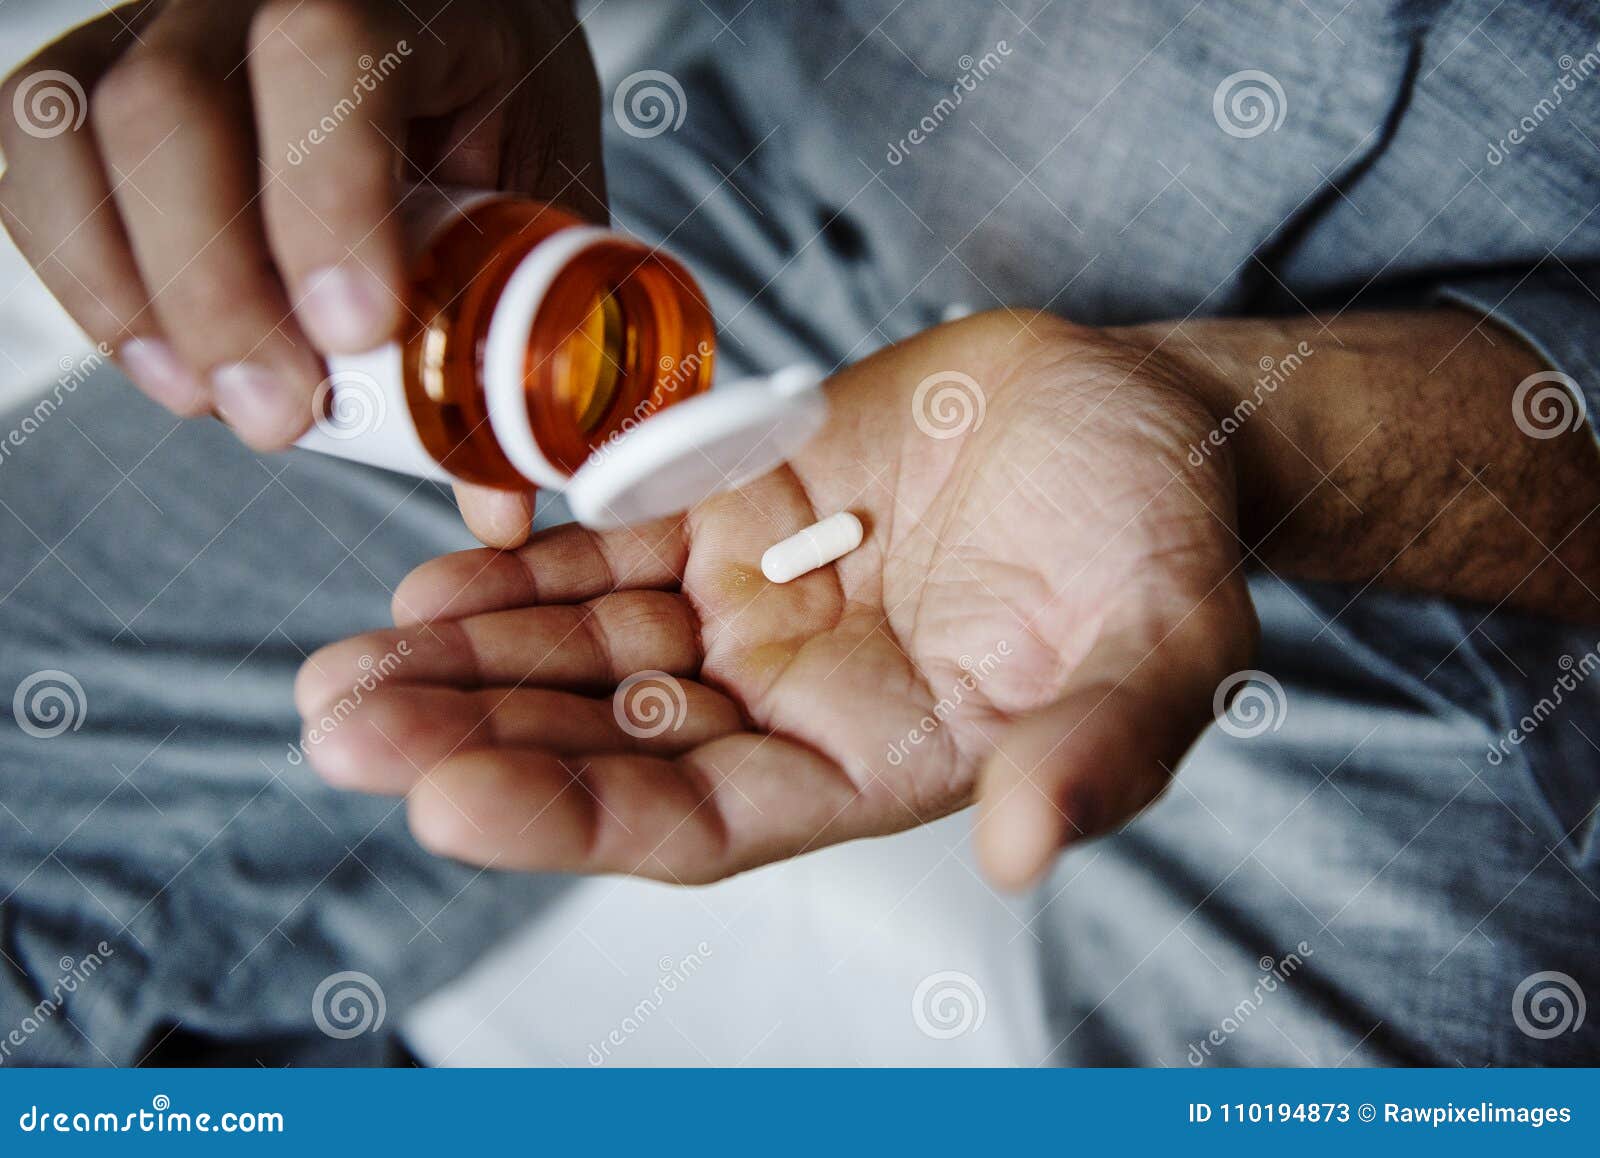 man taking medication health care